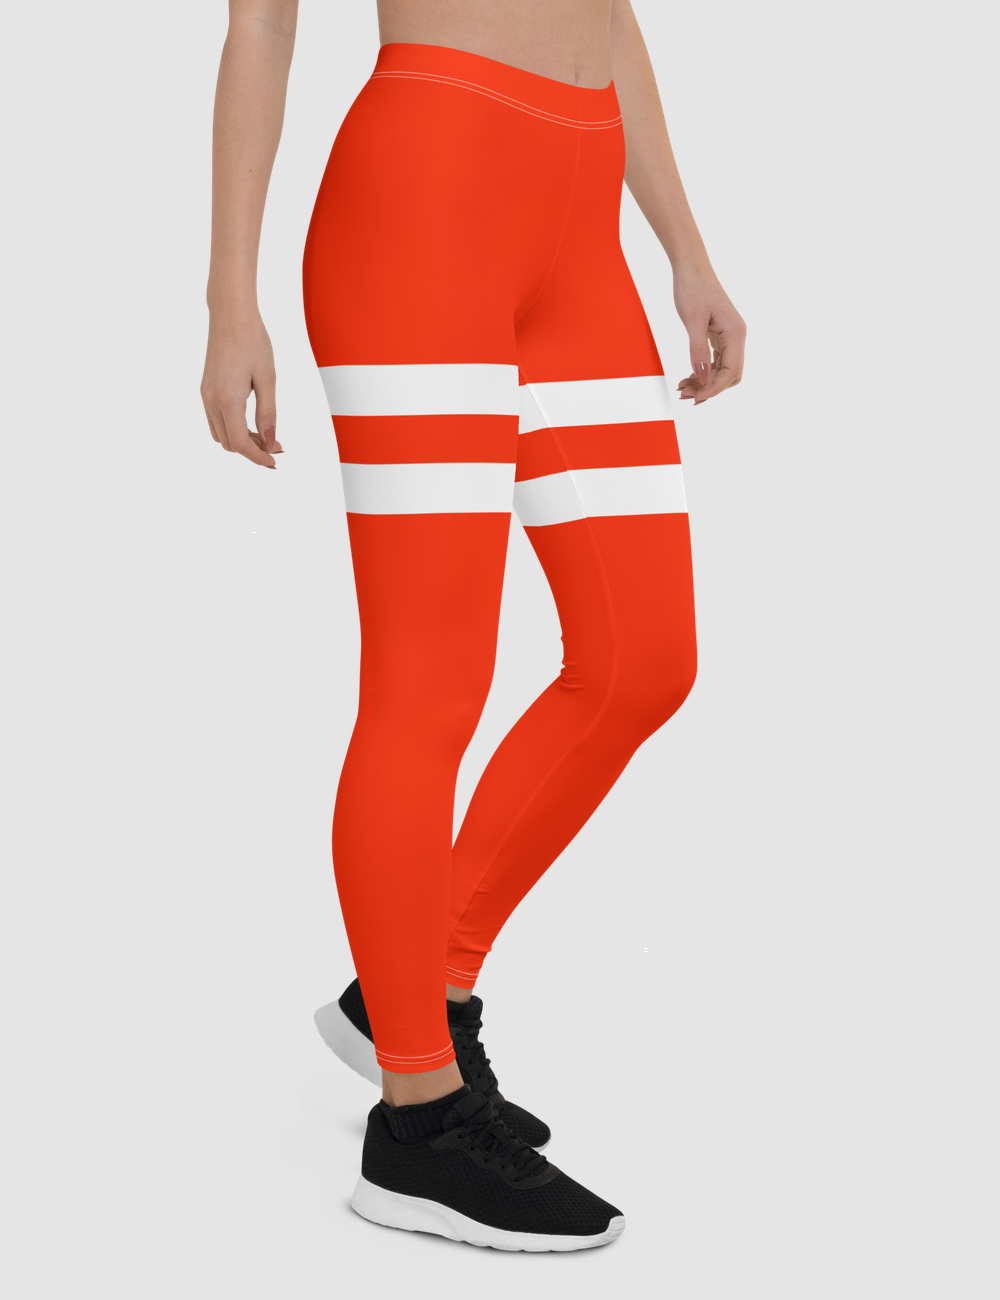 Red And White Double Thigh Striped | Women's Standard Yoga Leggings OniTakai